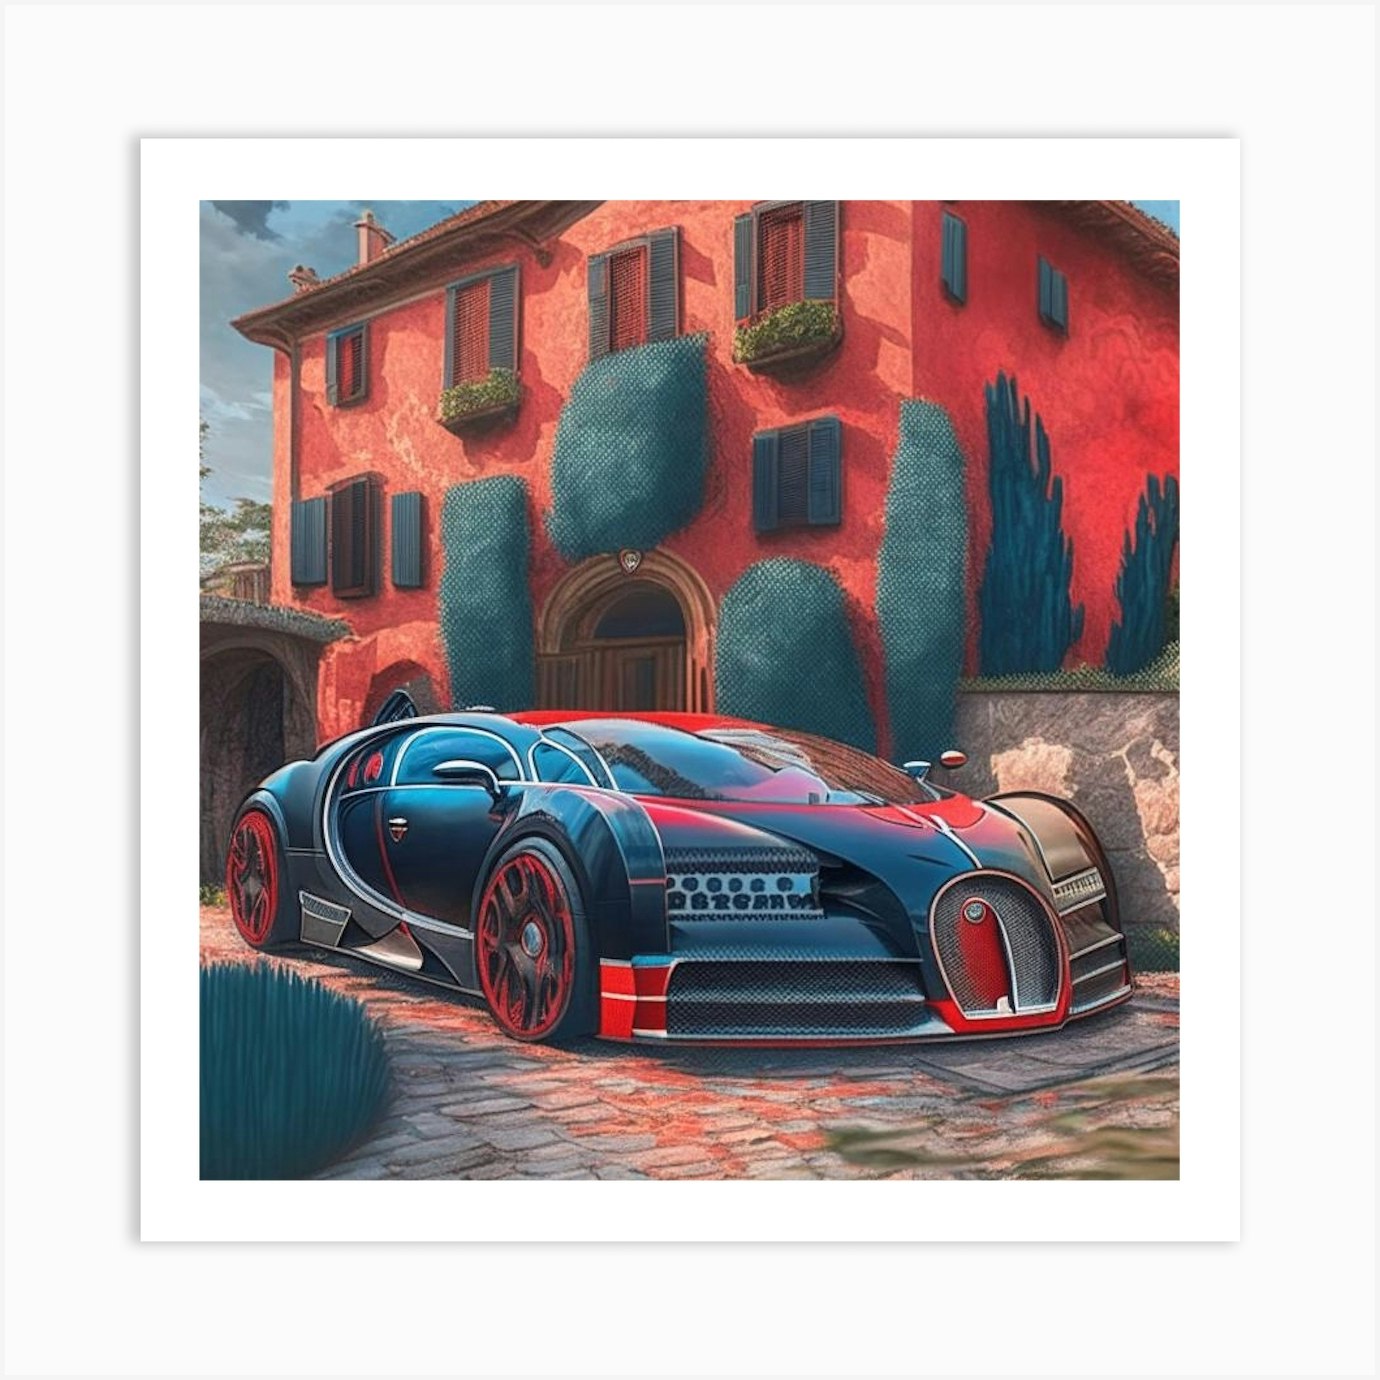 Bugatti Veyron 5 Art Print by Nohacreations/art_bridge63 - Fy